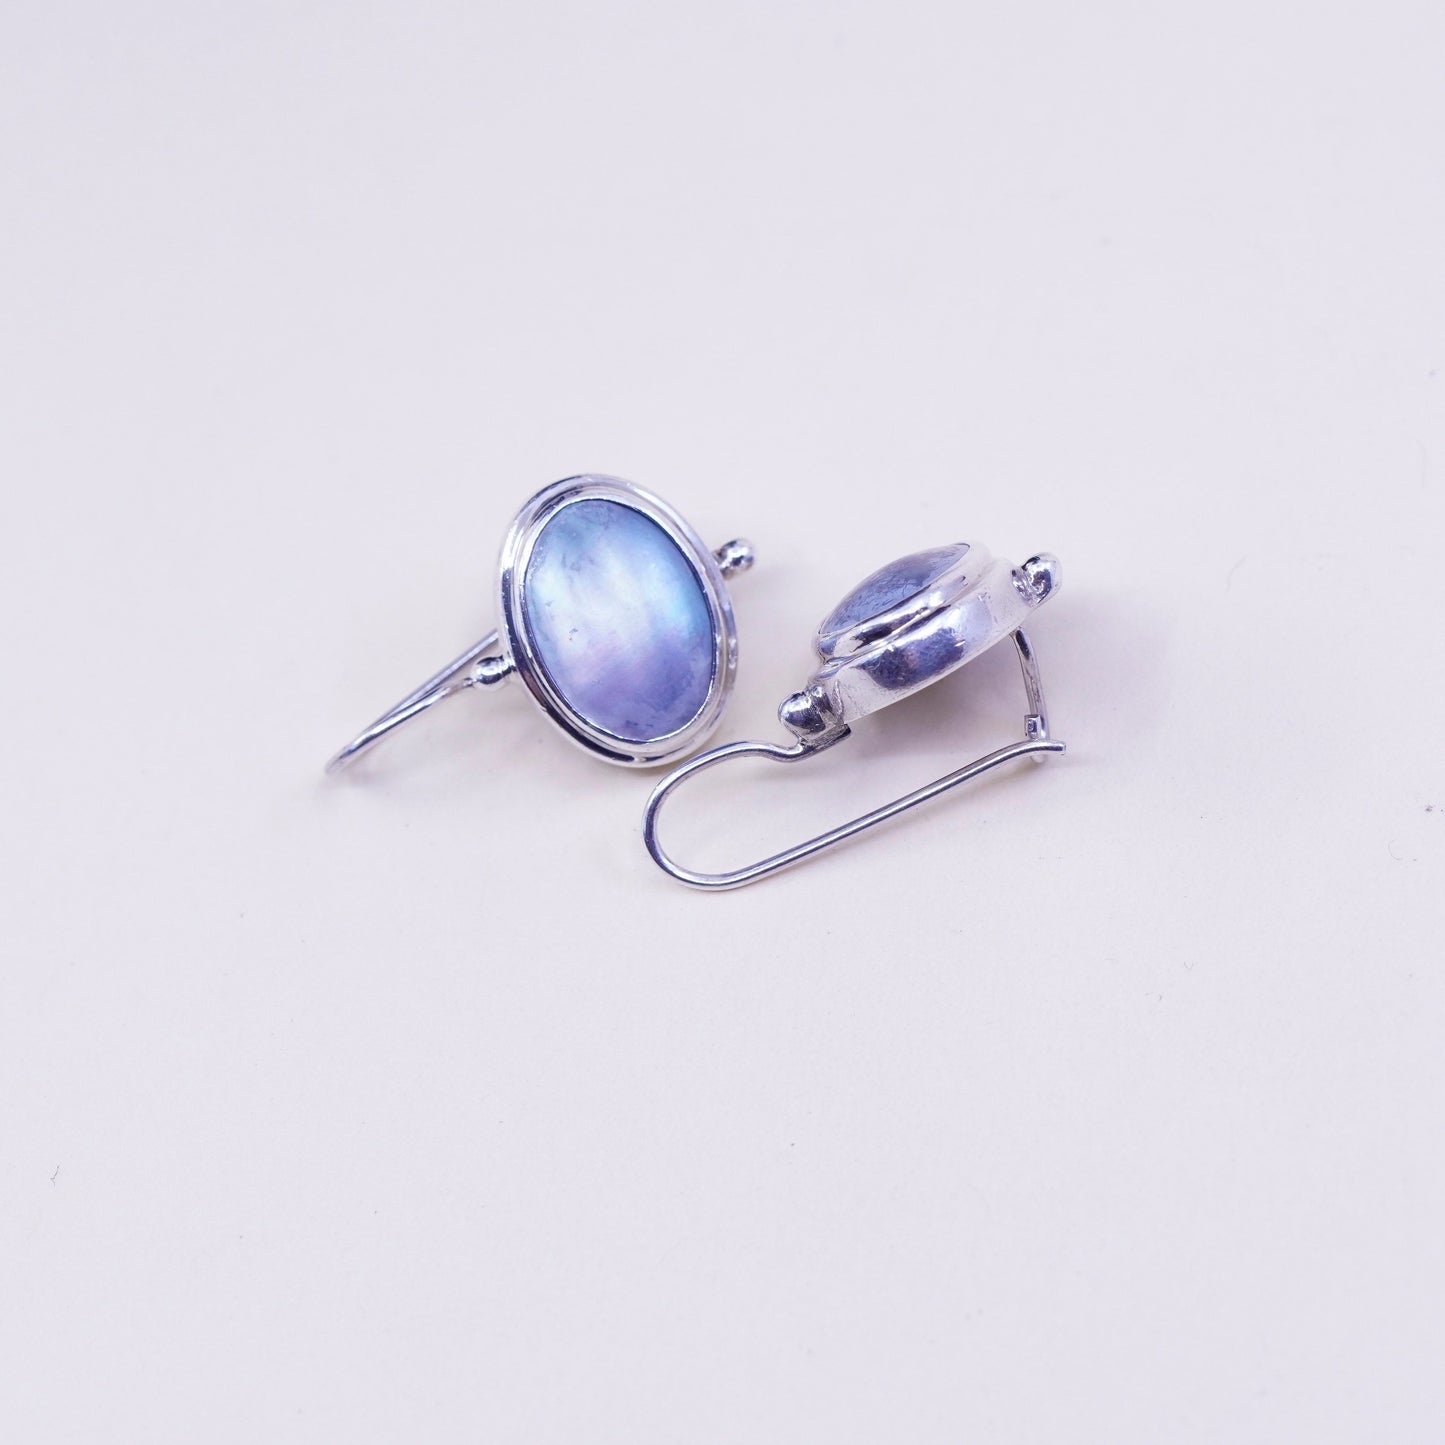 Vintage Sarda Sterling 925 silver handmade earrings with pearl drops